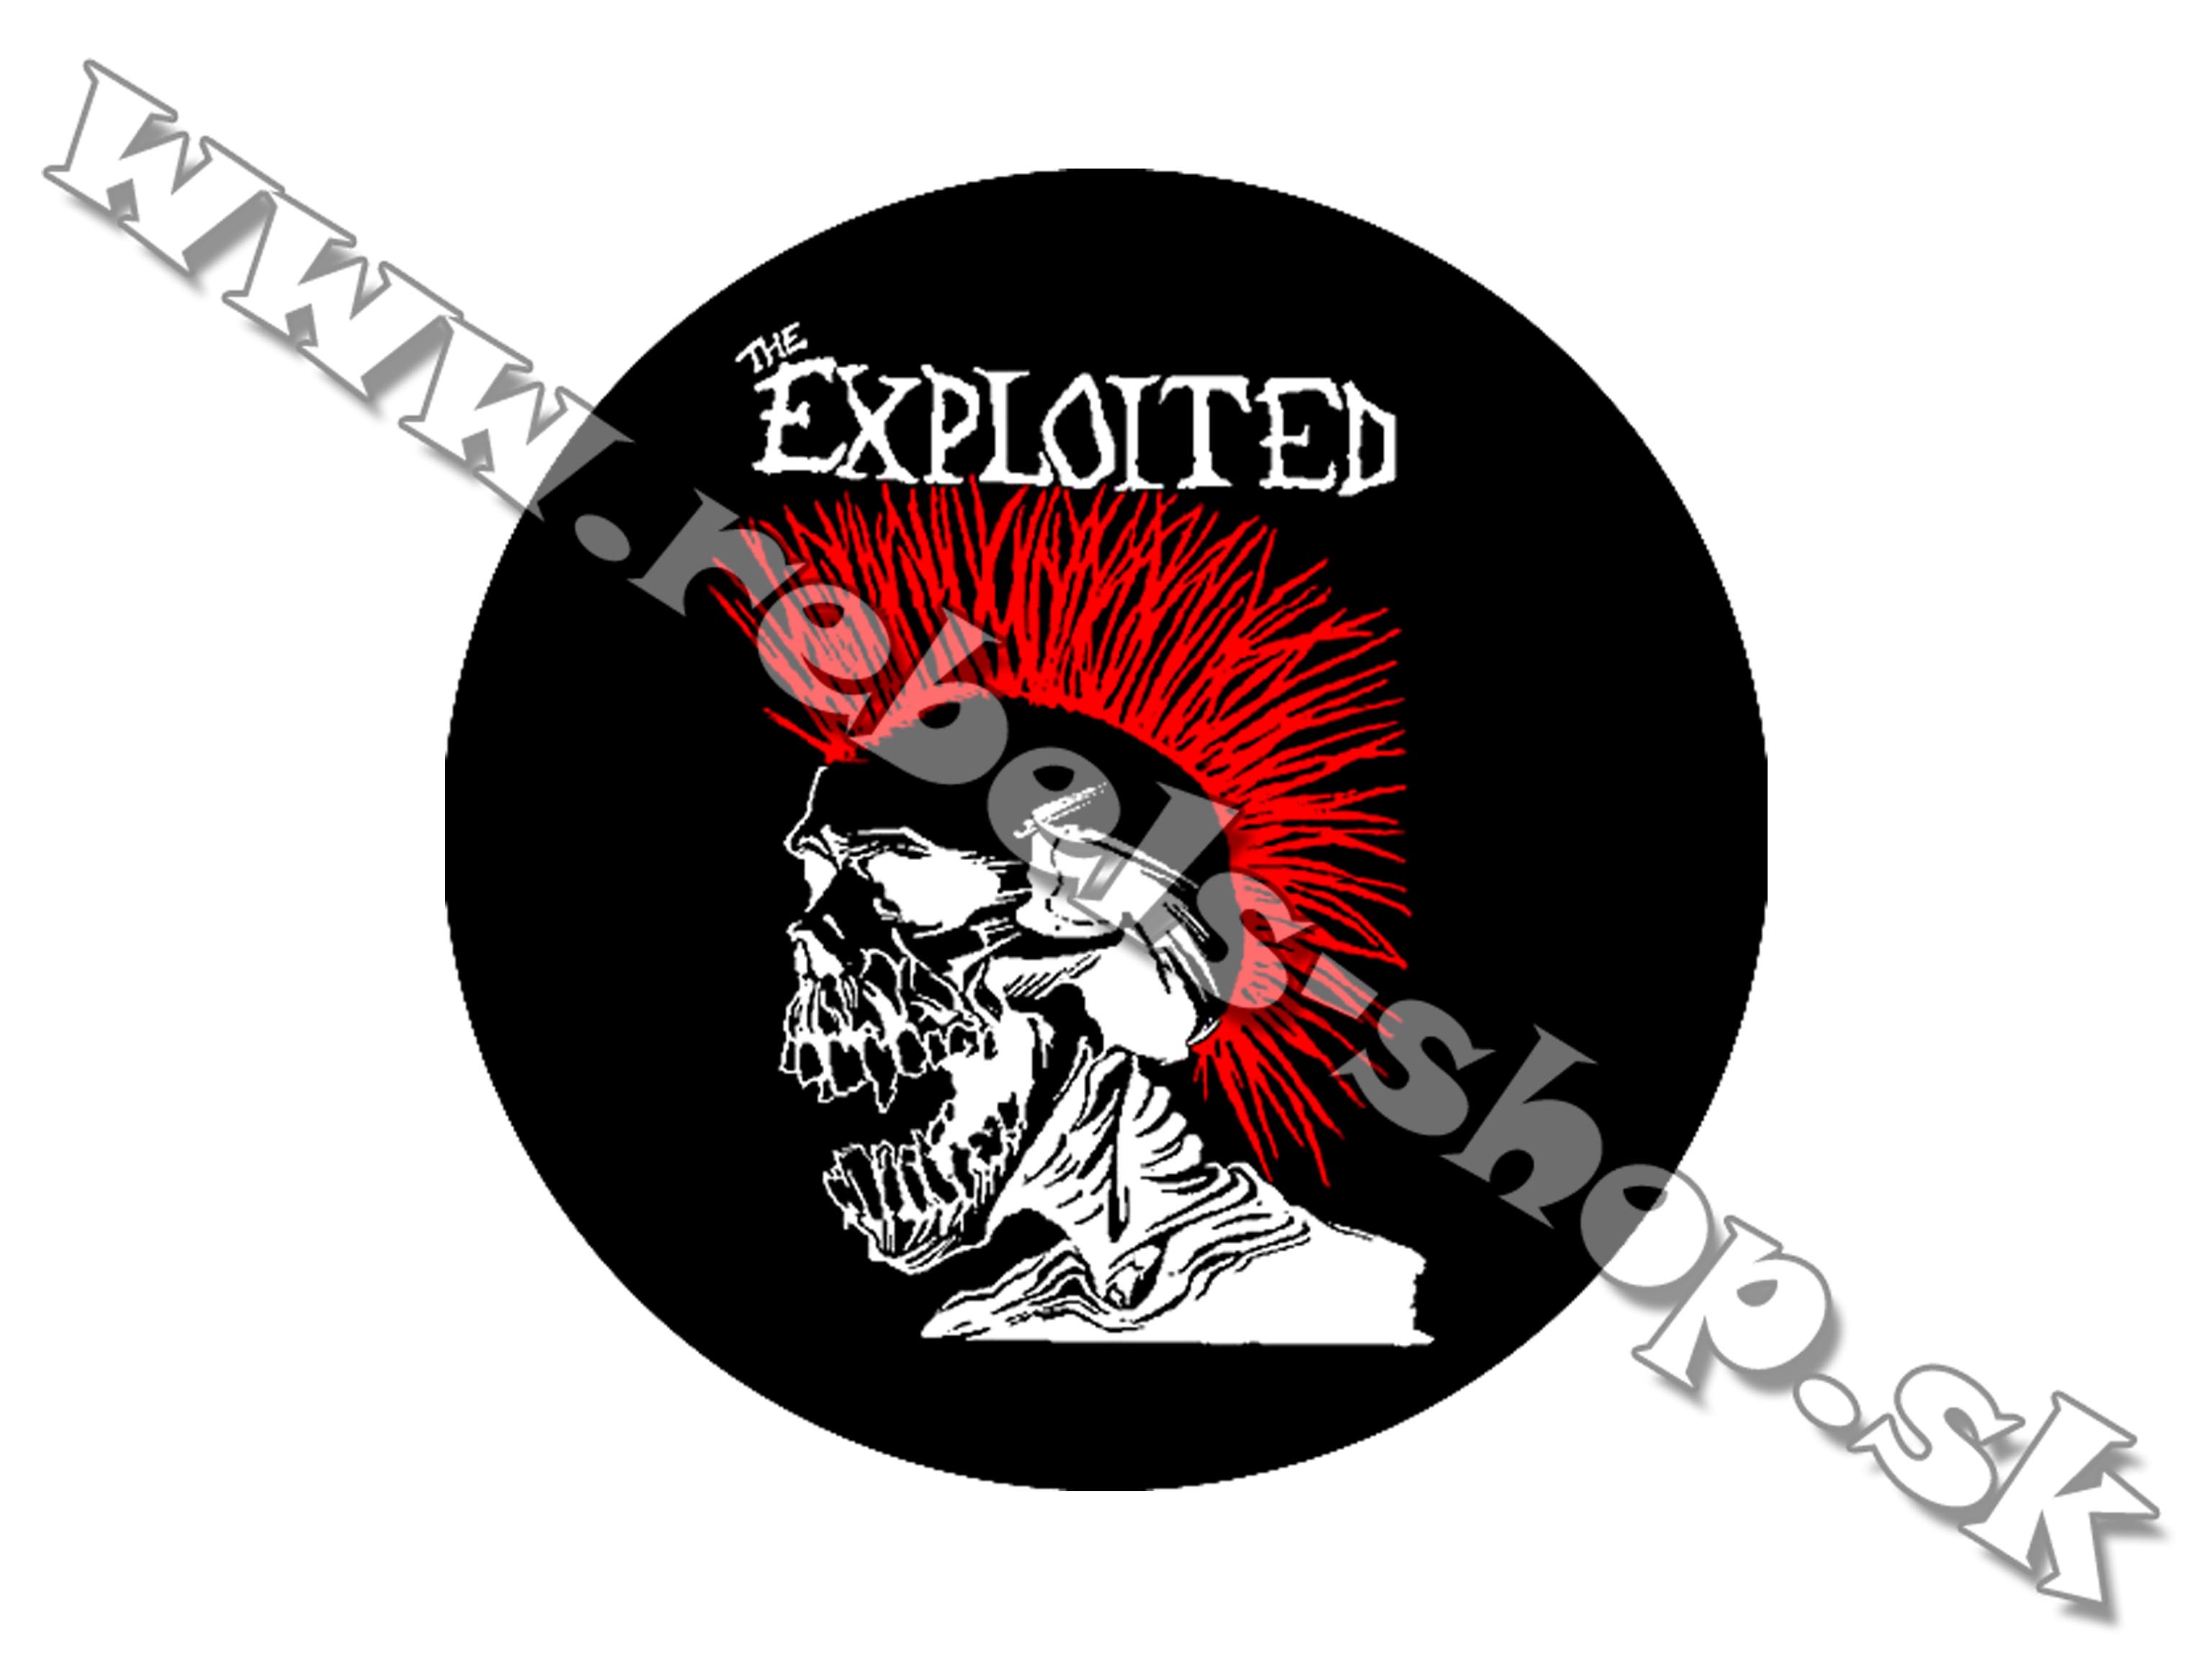 Odznak "The Exploited"